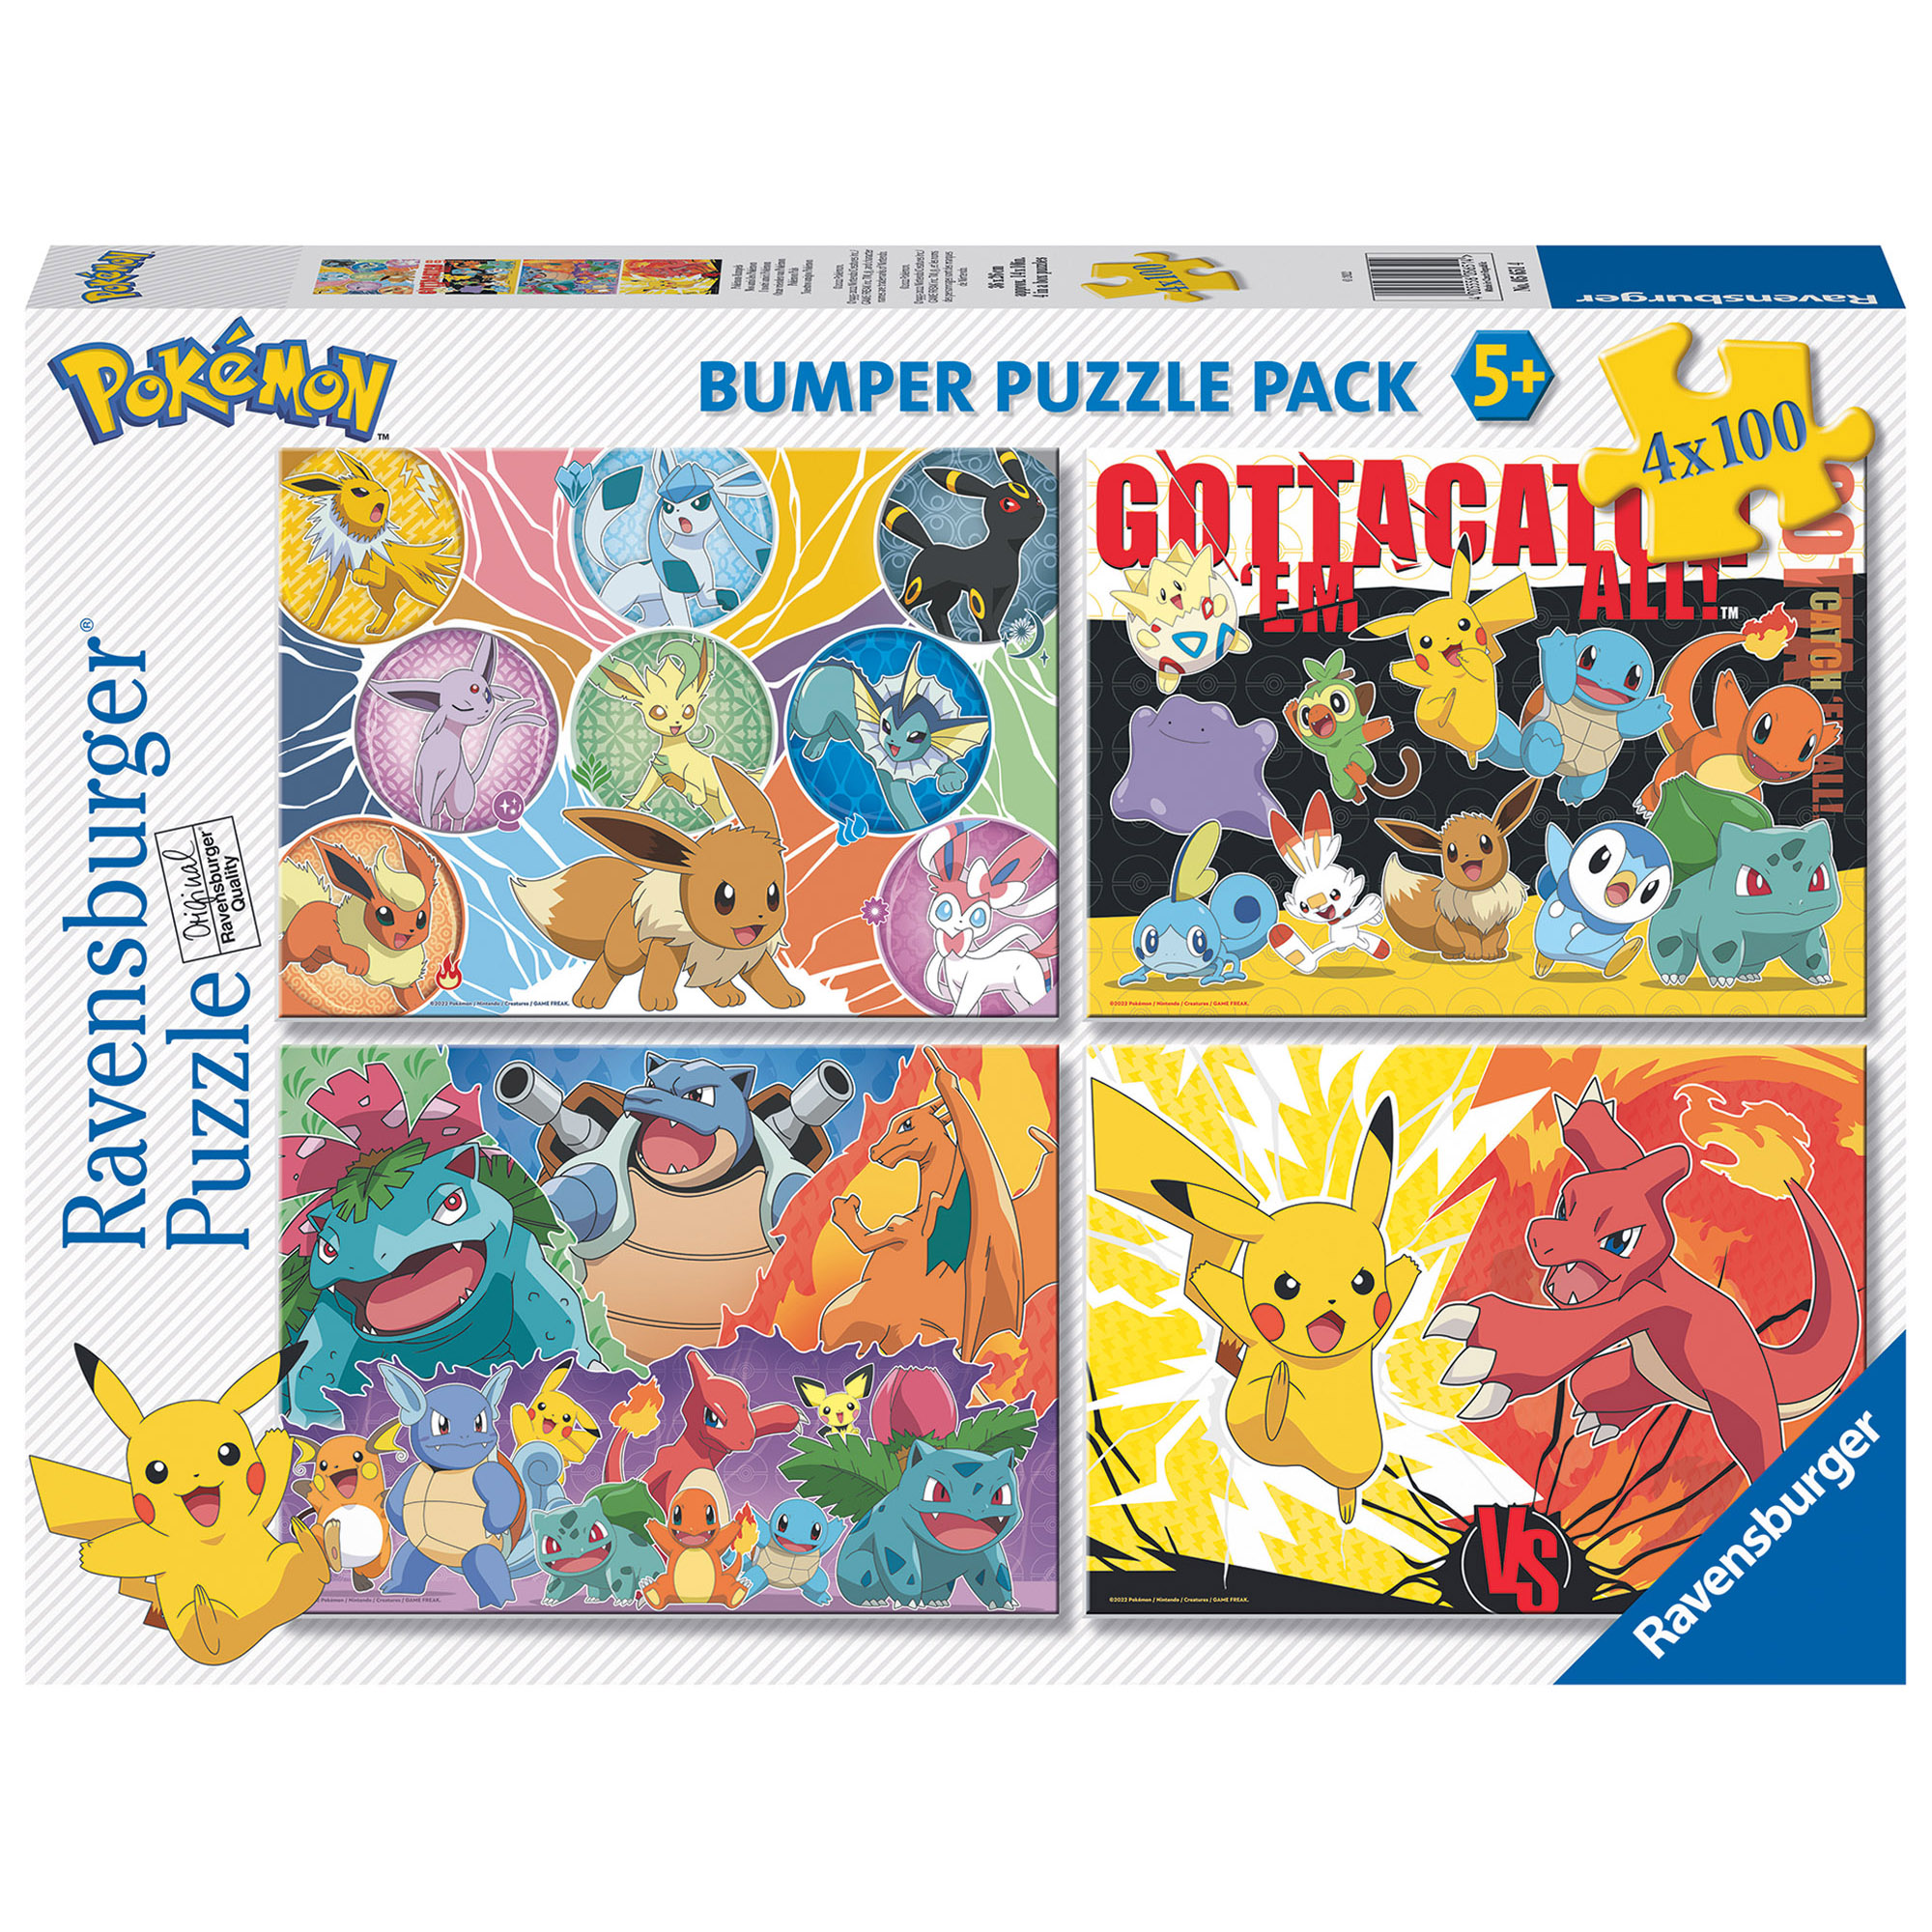 Ravensburger - puzzle pokémon, collezione bumper pack 4x100, 4 puzzle da 100 pezzi, età raccomandata 5+ anni - POKEMON, RAVENSBURGER